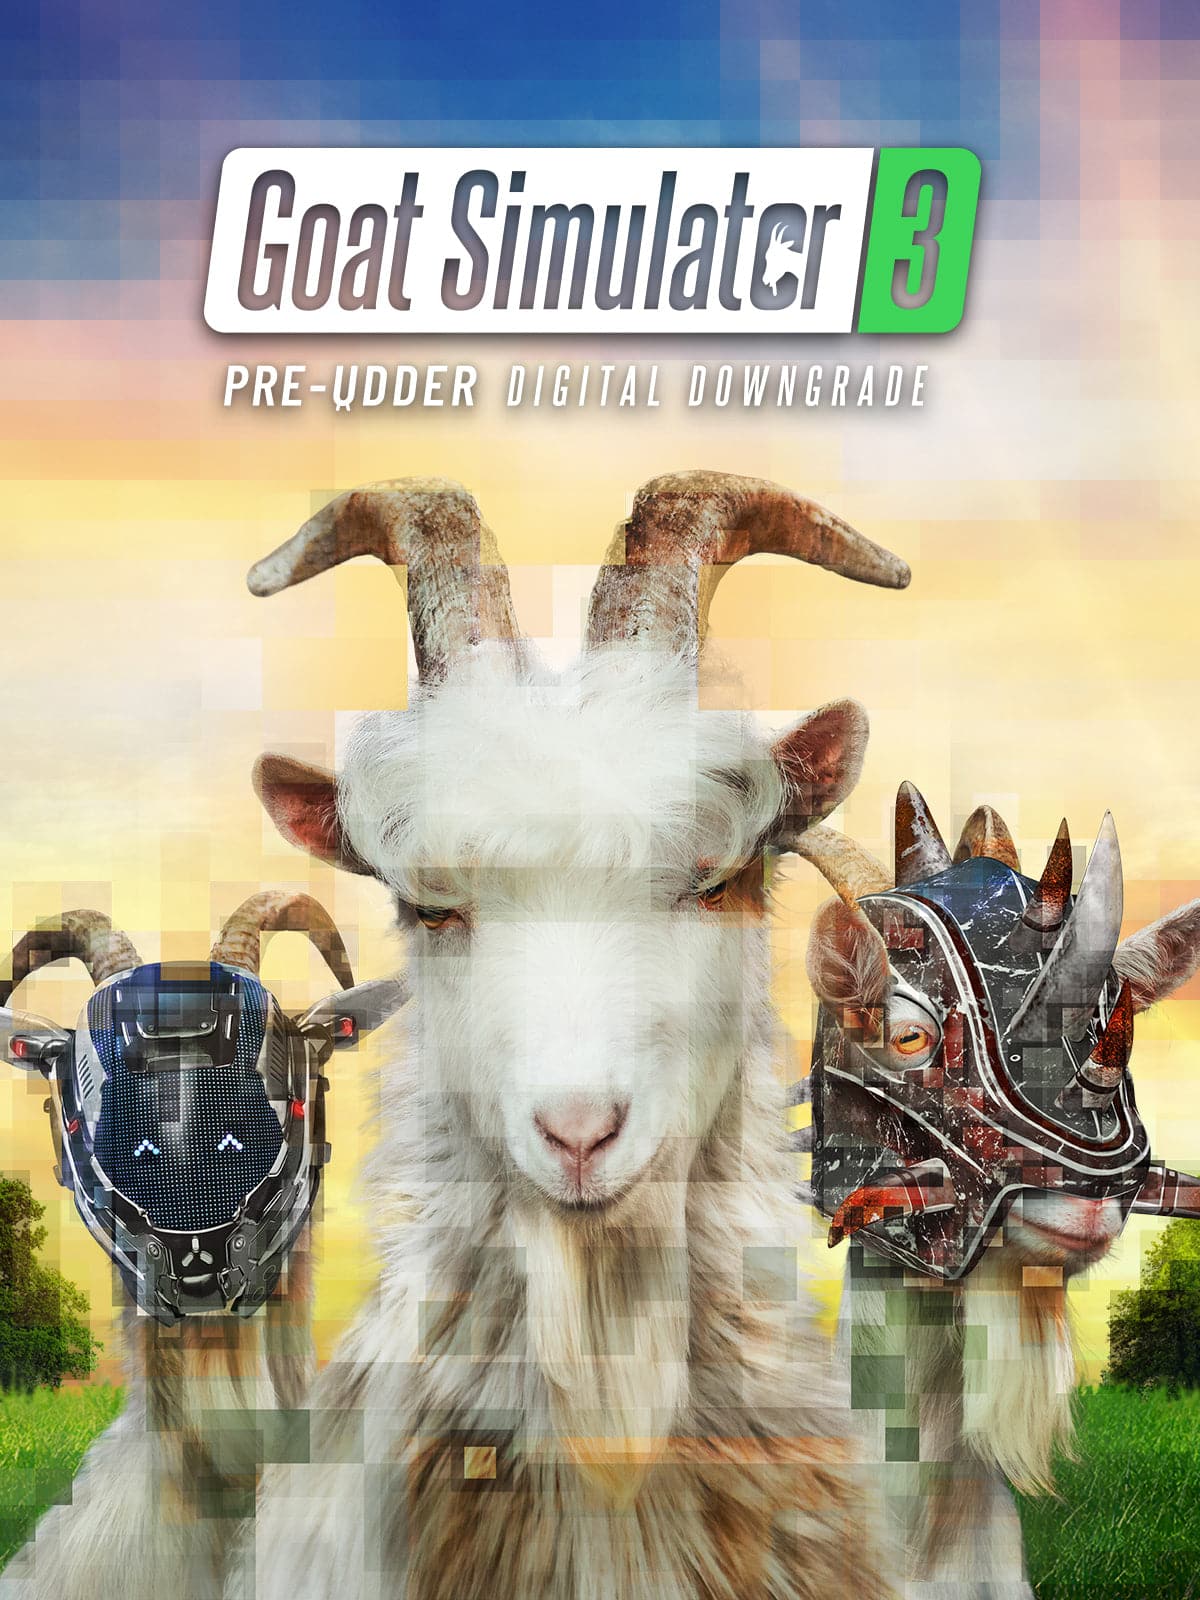 Goat Simulator 3 (Digital Downgrade Edition) - למחשב